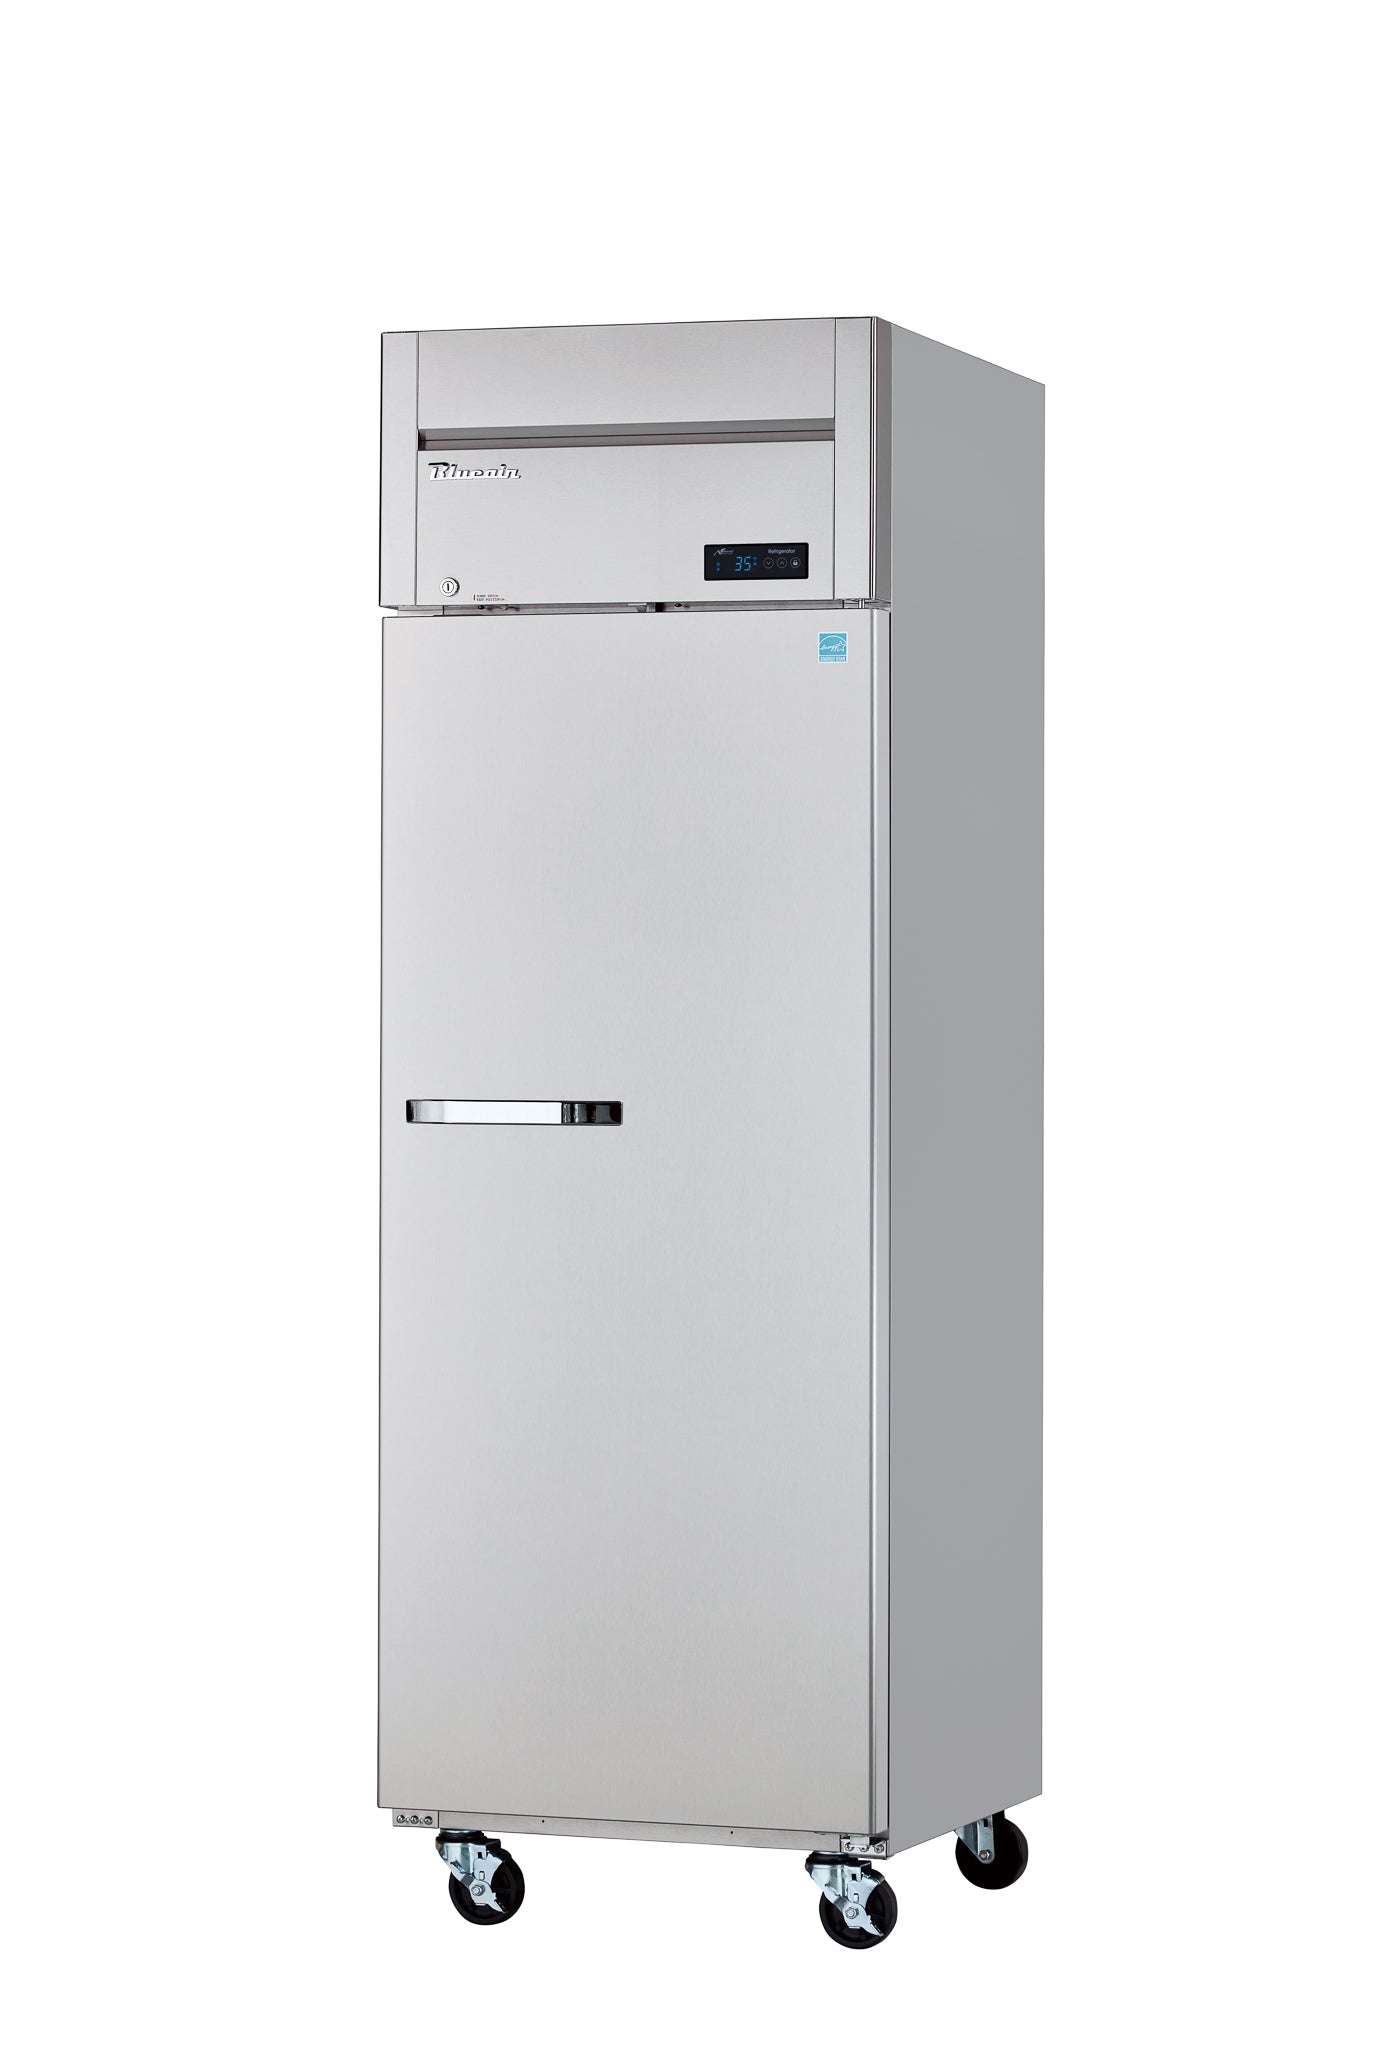 Blue Air - BSR23T-HC, 1 Solid Door Stainless Refrigerator, Top-Mount Compressor, R-290 Refrigerant